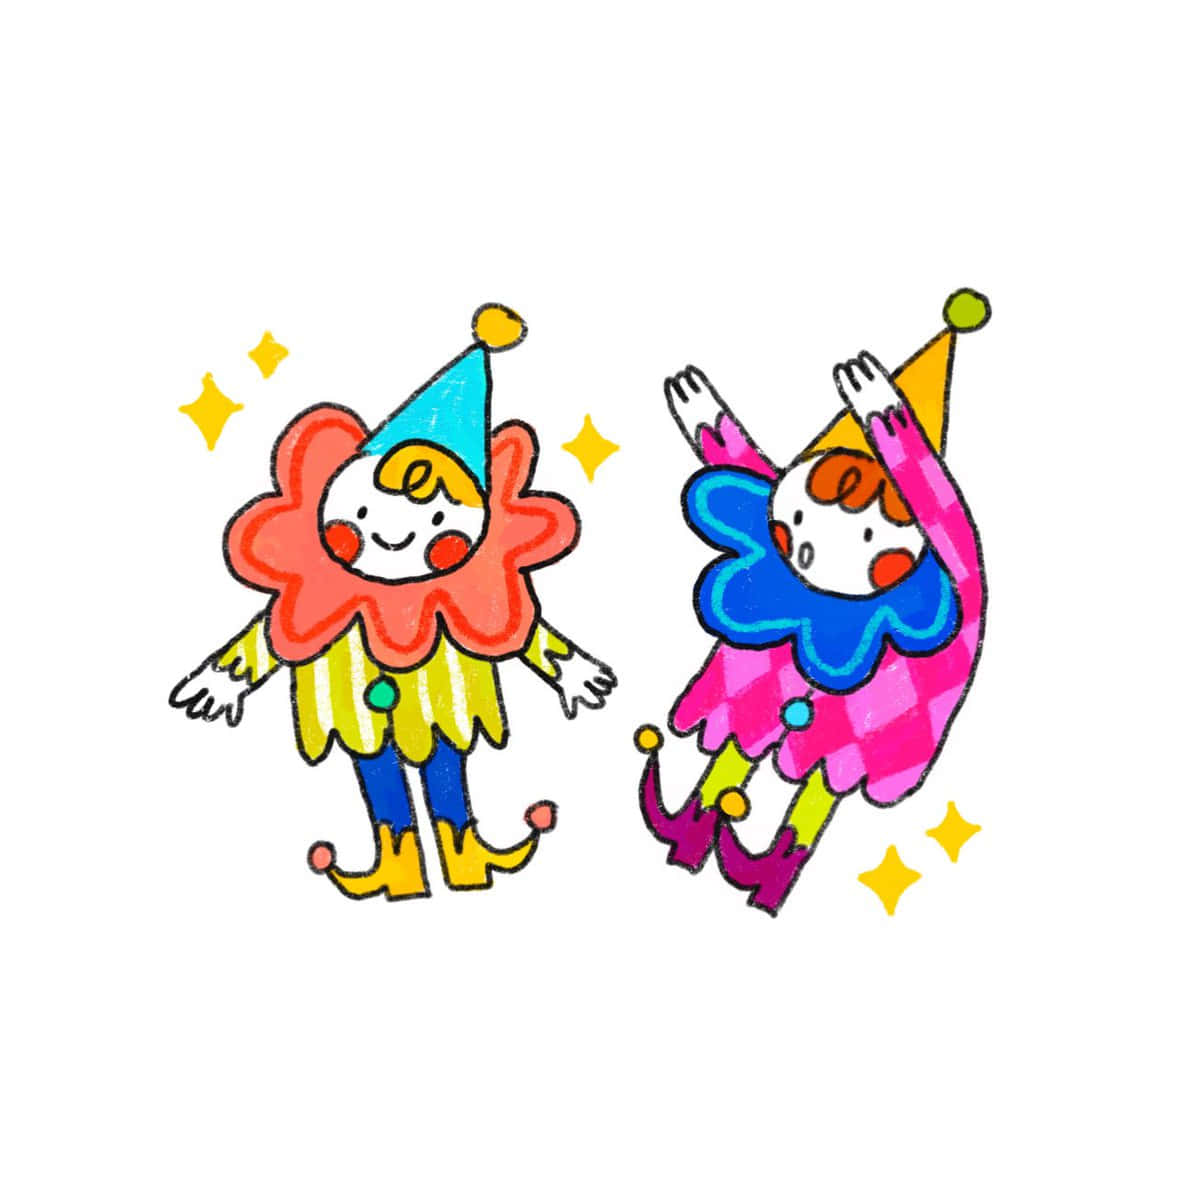 Colorful Clowncore Cartoon Duo Wallpaper